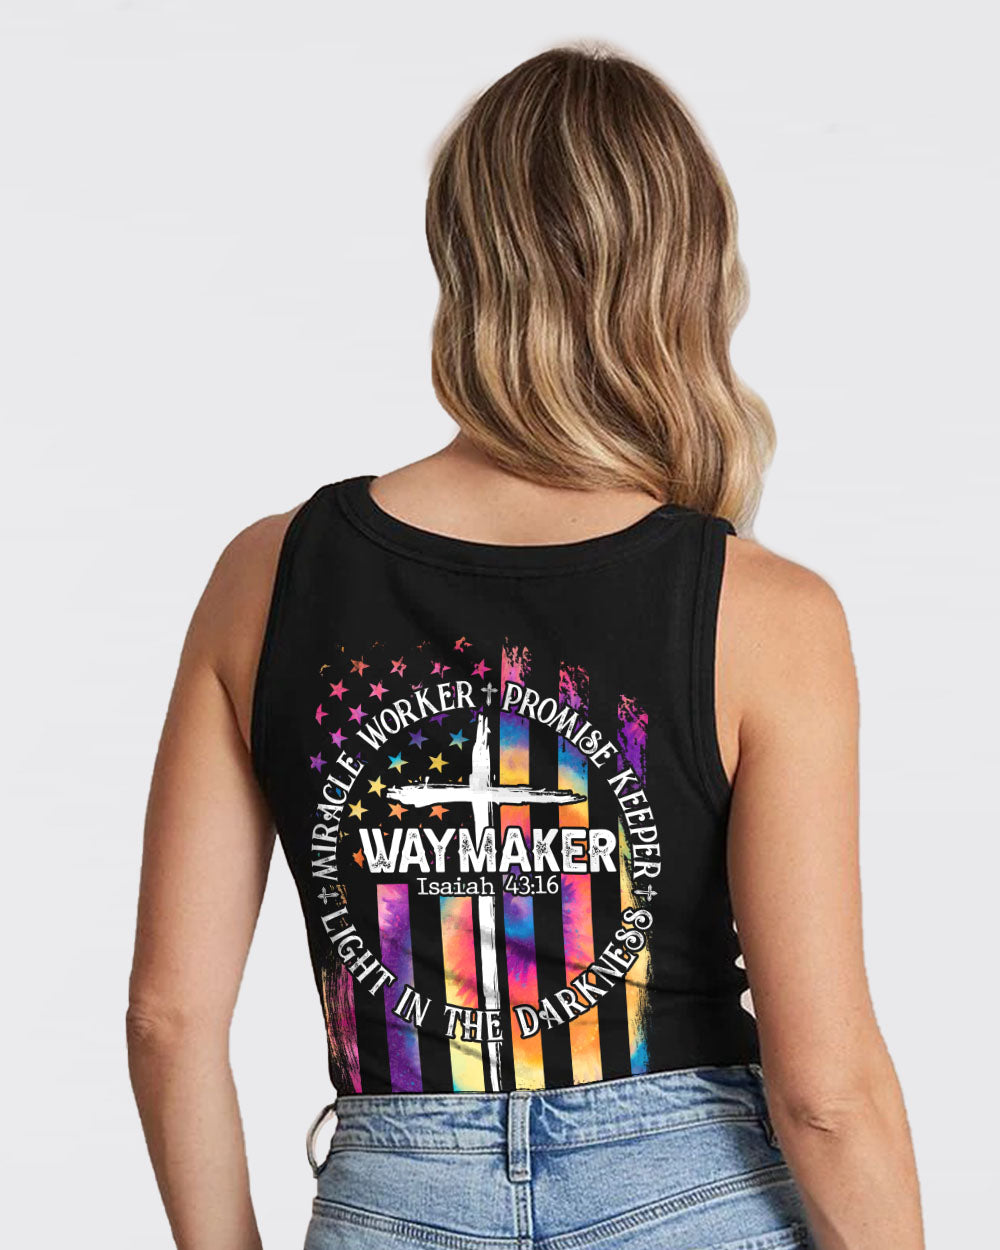 Way Maker Miracle Worker Flag Tie Dye Women's Christian Tanks